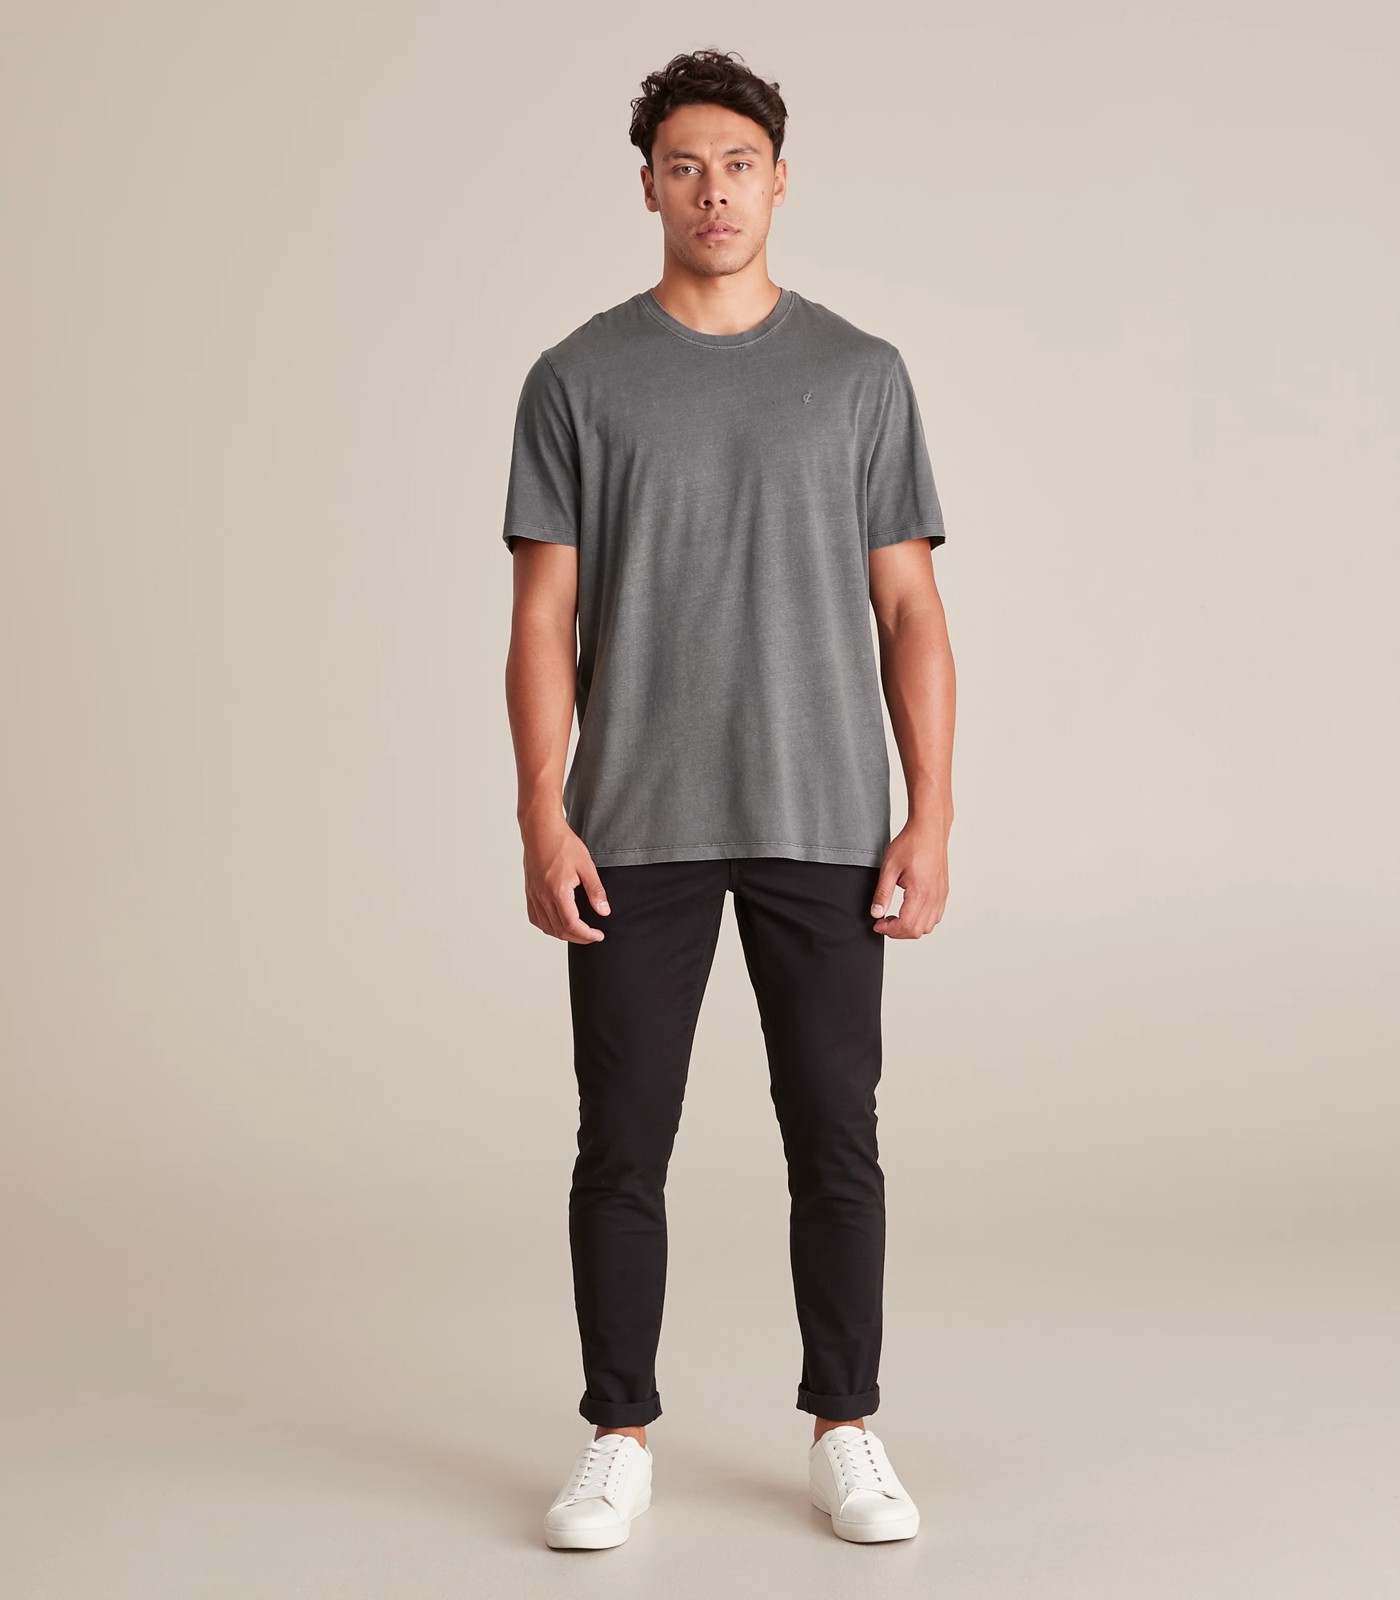 Commons T-Shirt - Charcoal | Target Australia